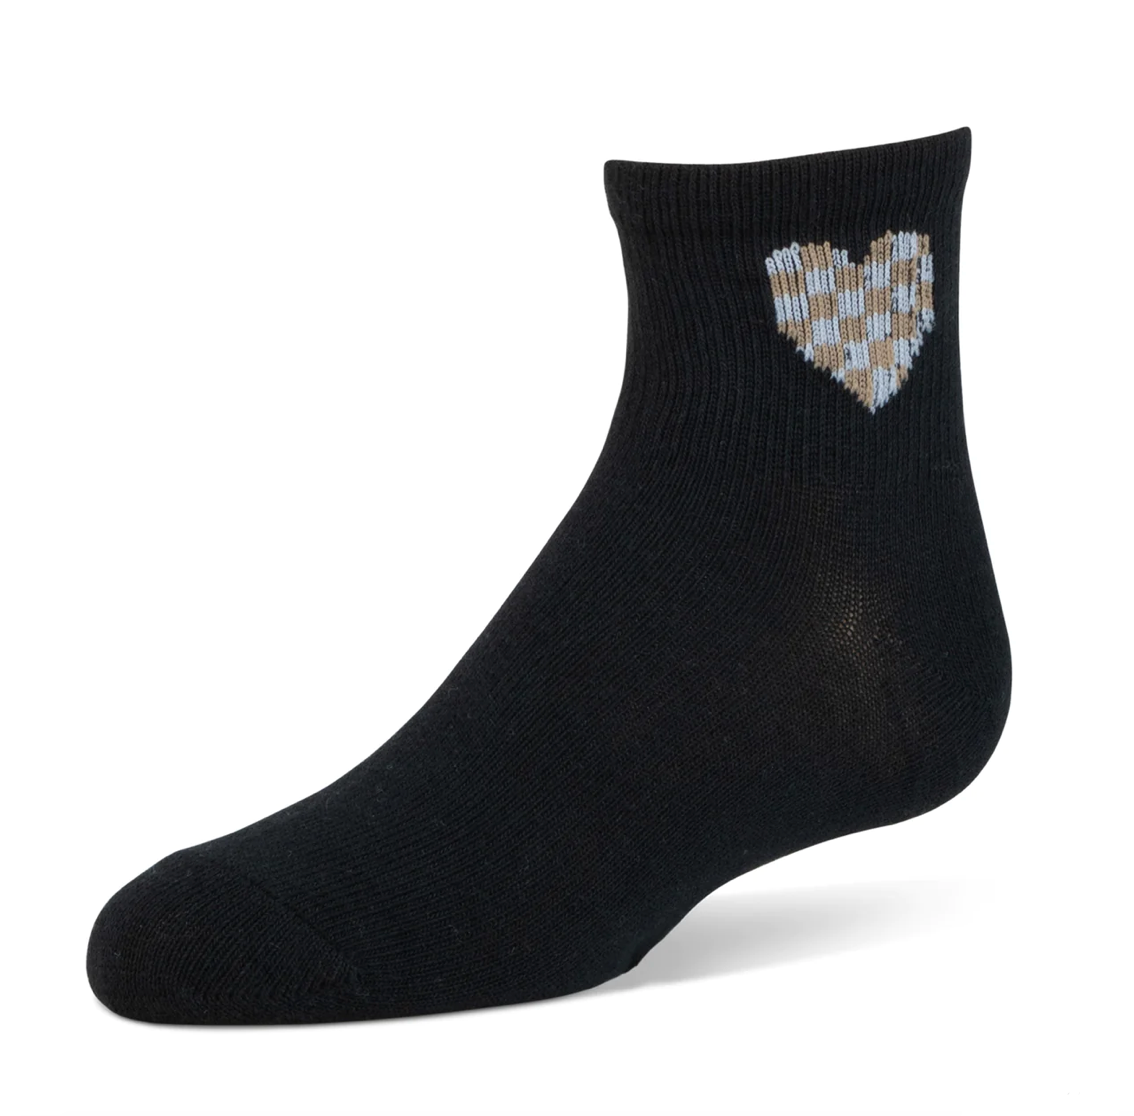 Zubii Girls Checkered Heart Ankle Socks